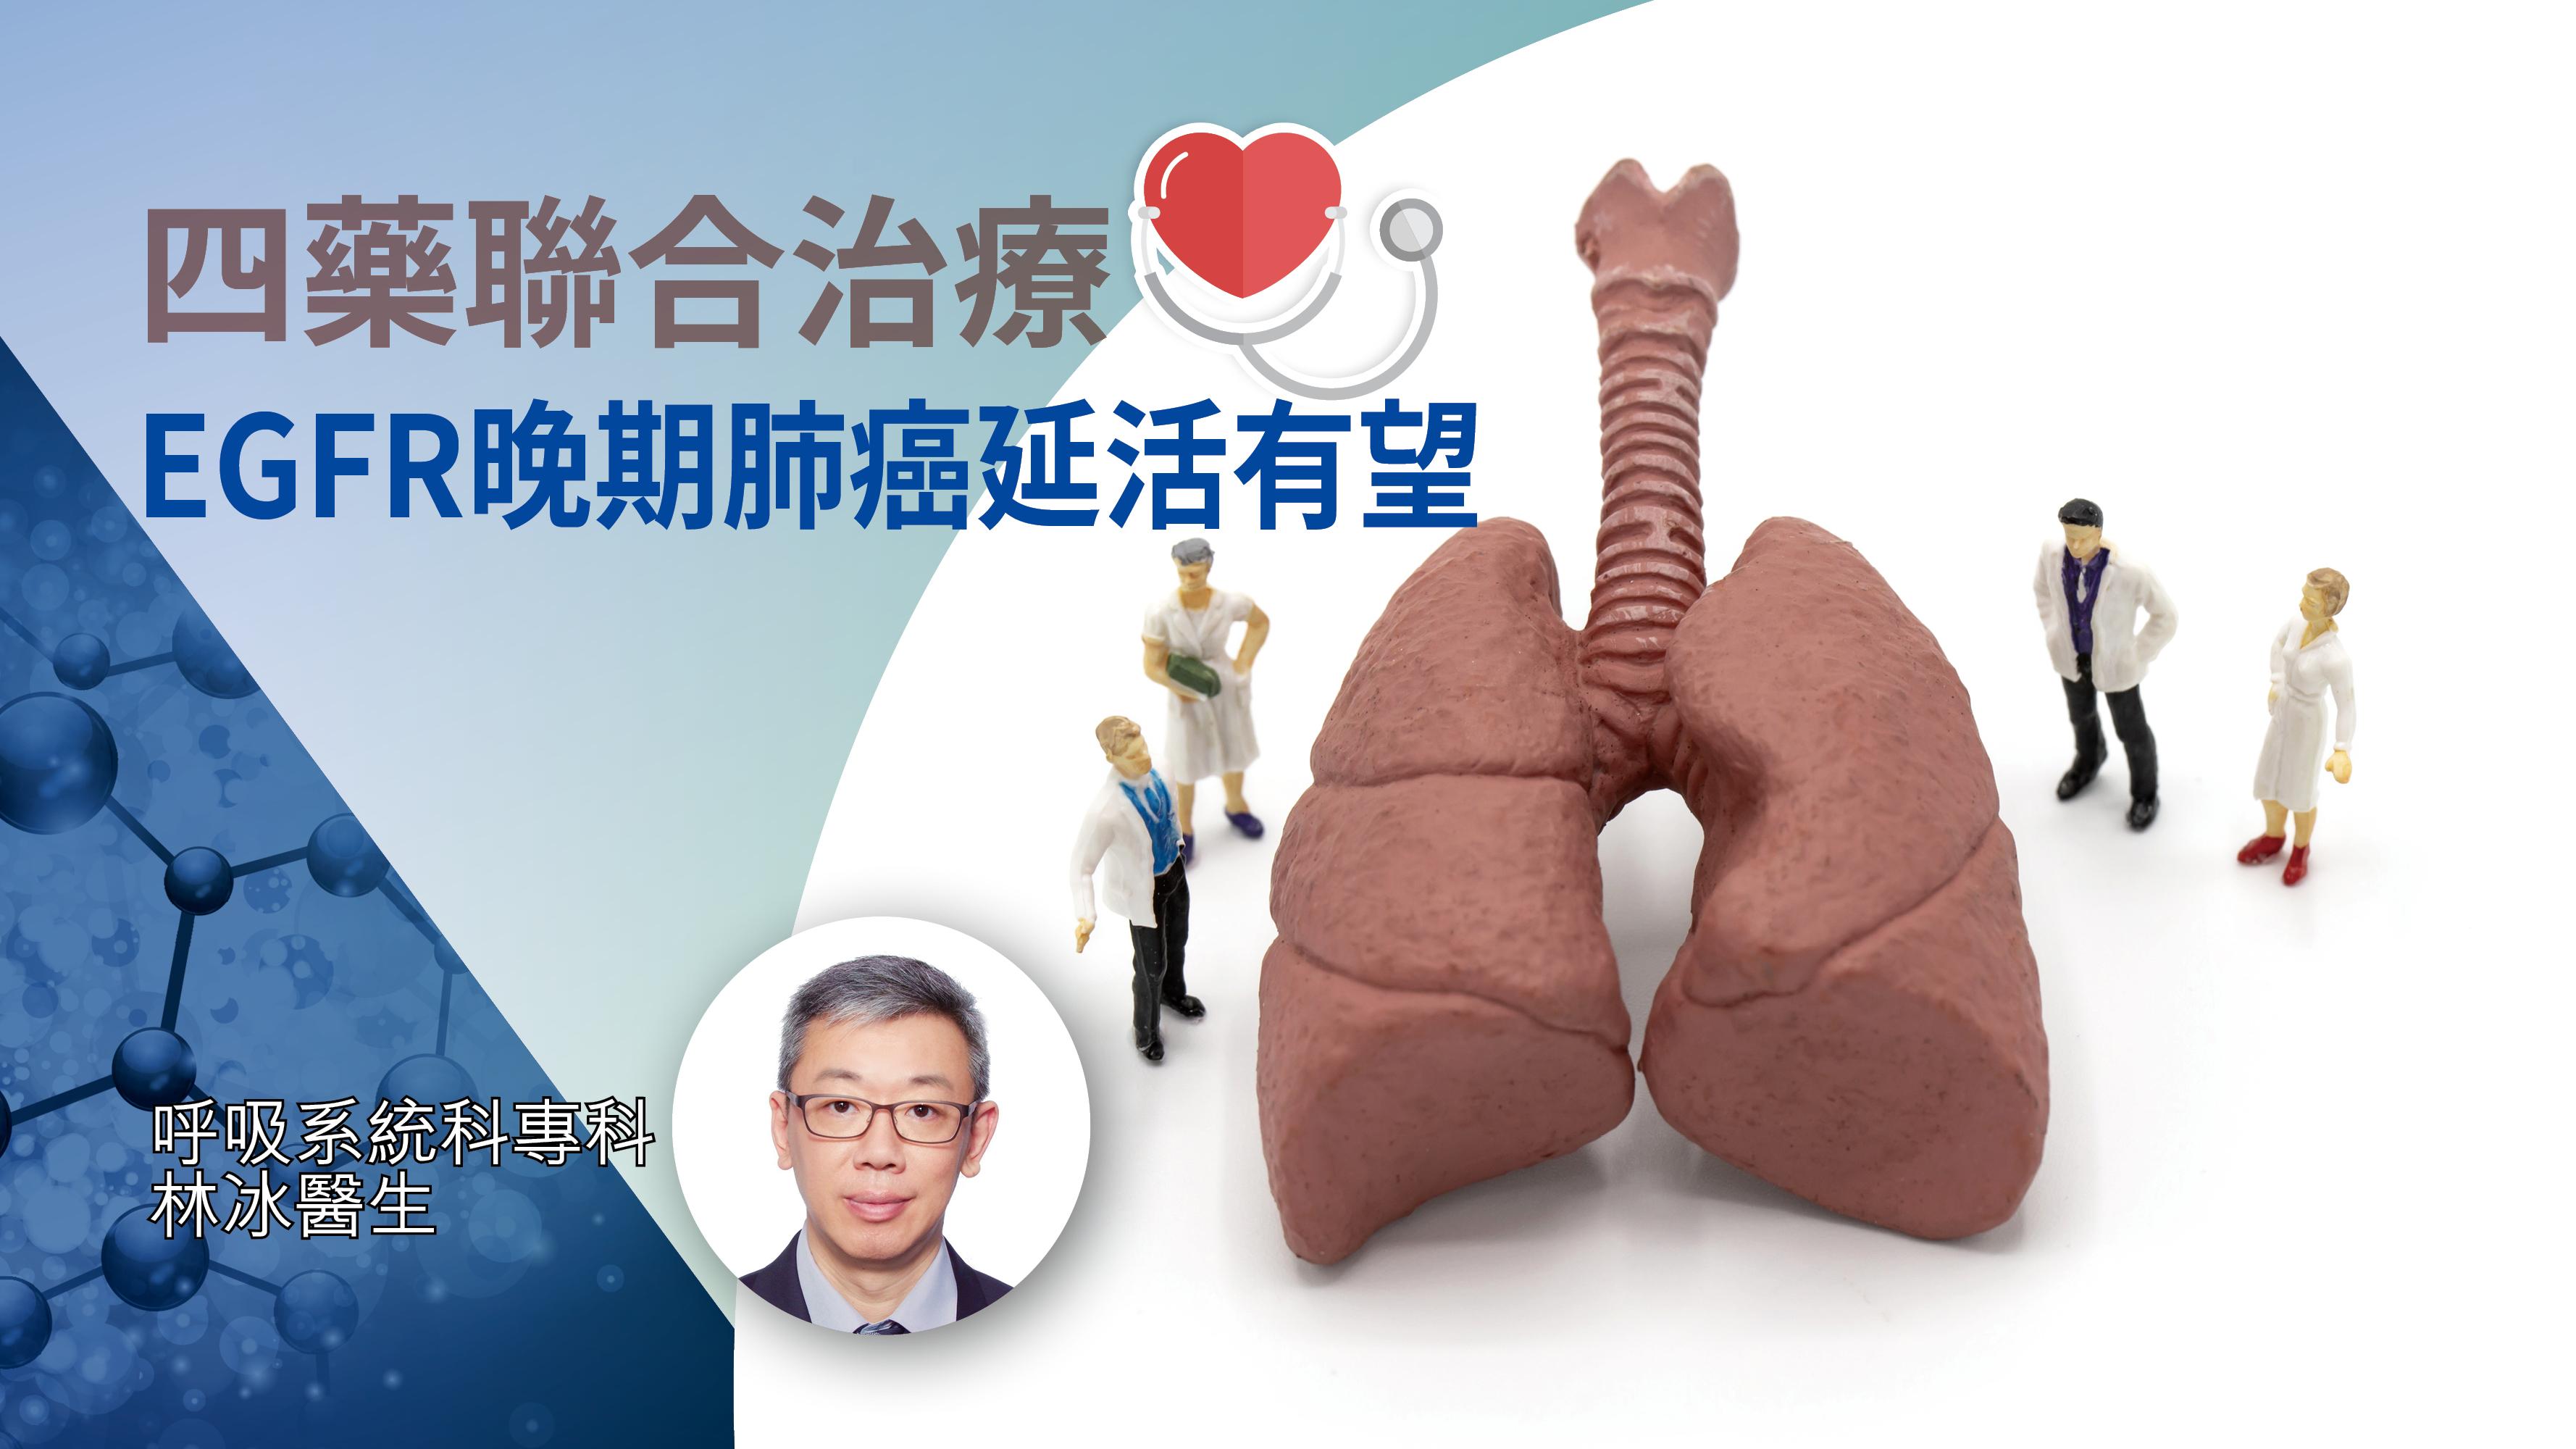 EGFR晚期肺癌四藥聯合治療